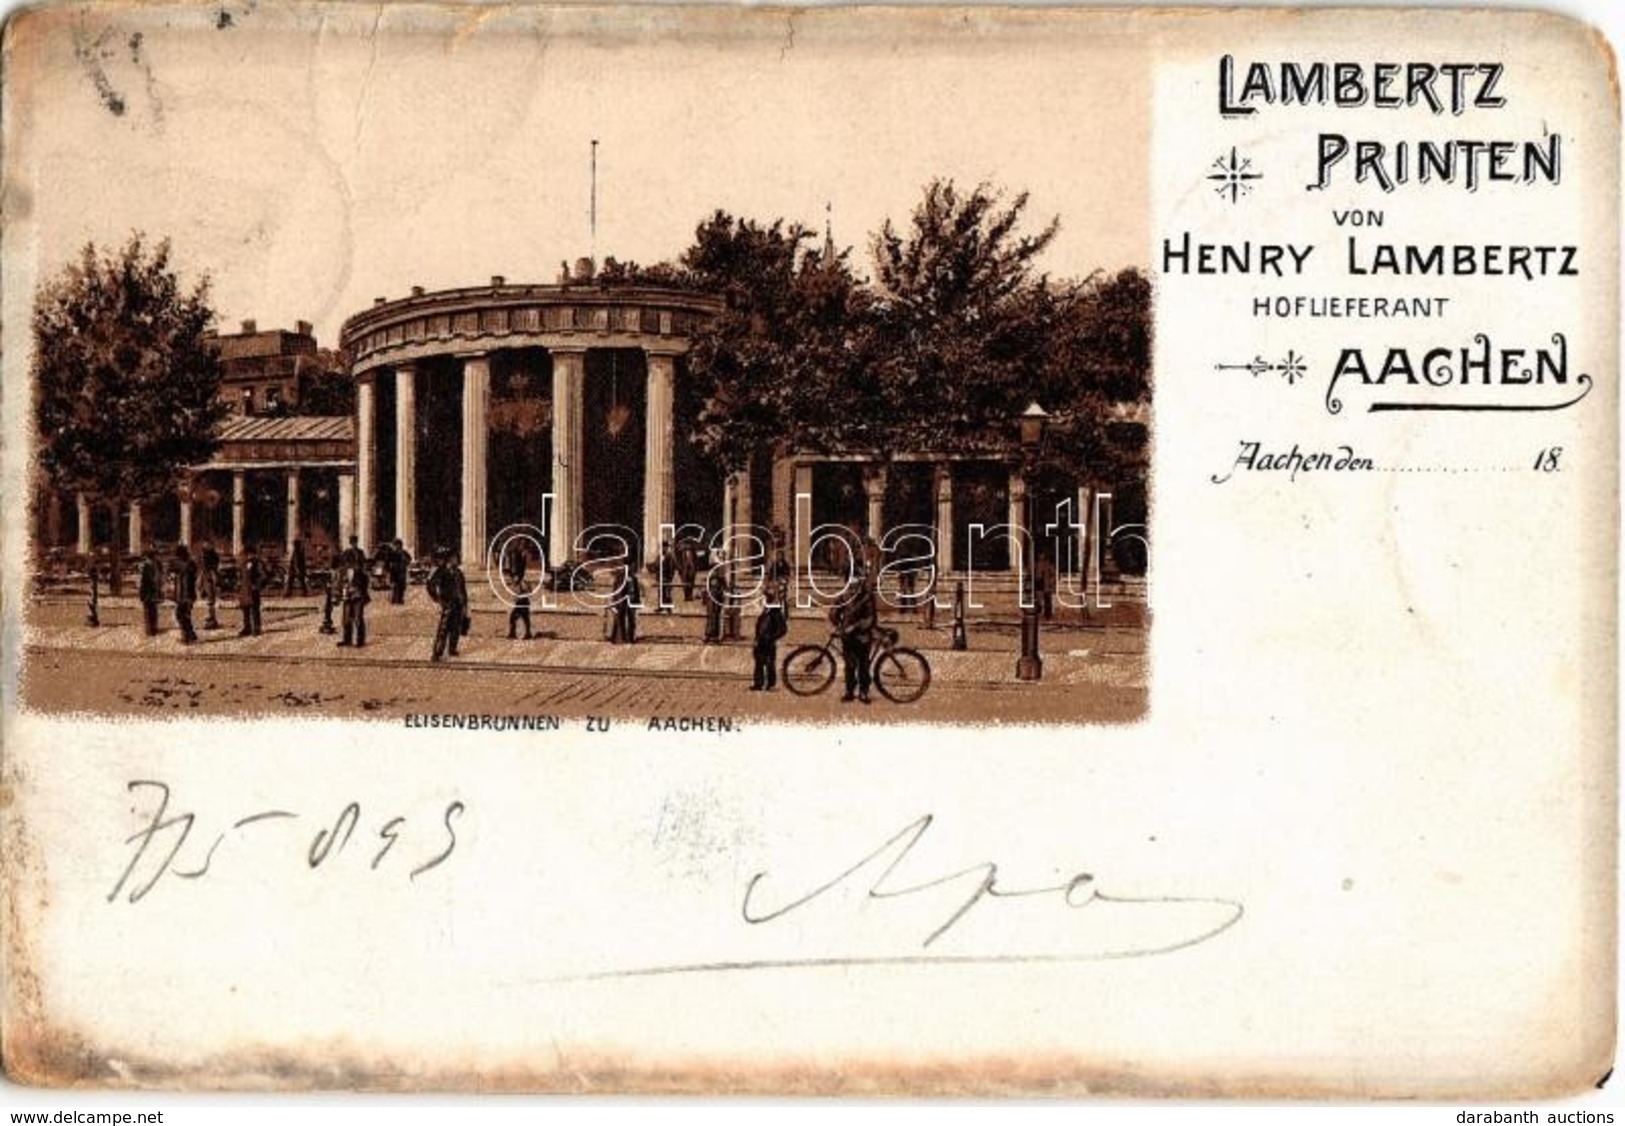 T3 1899 (Vorläufer!) Aachen, Eisenbrunnen, Lambertz Printen Von Henry Lambertz Hoflieferant. Advertising Litho (tear) - Non Classés